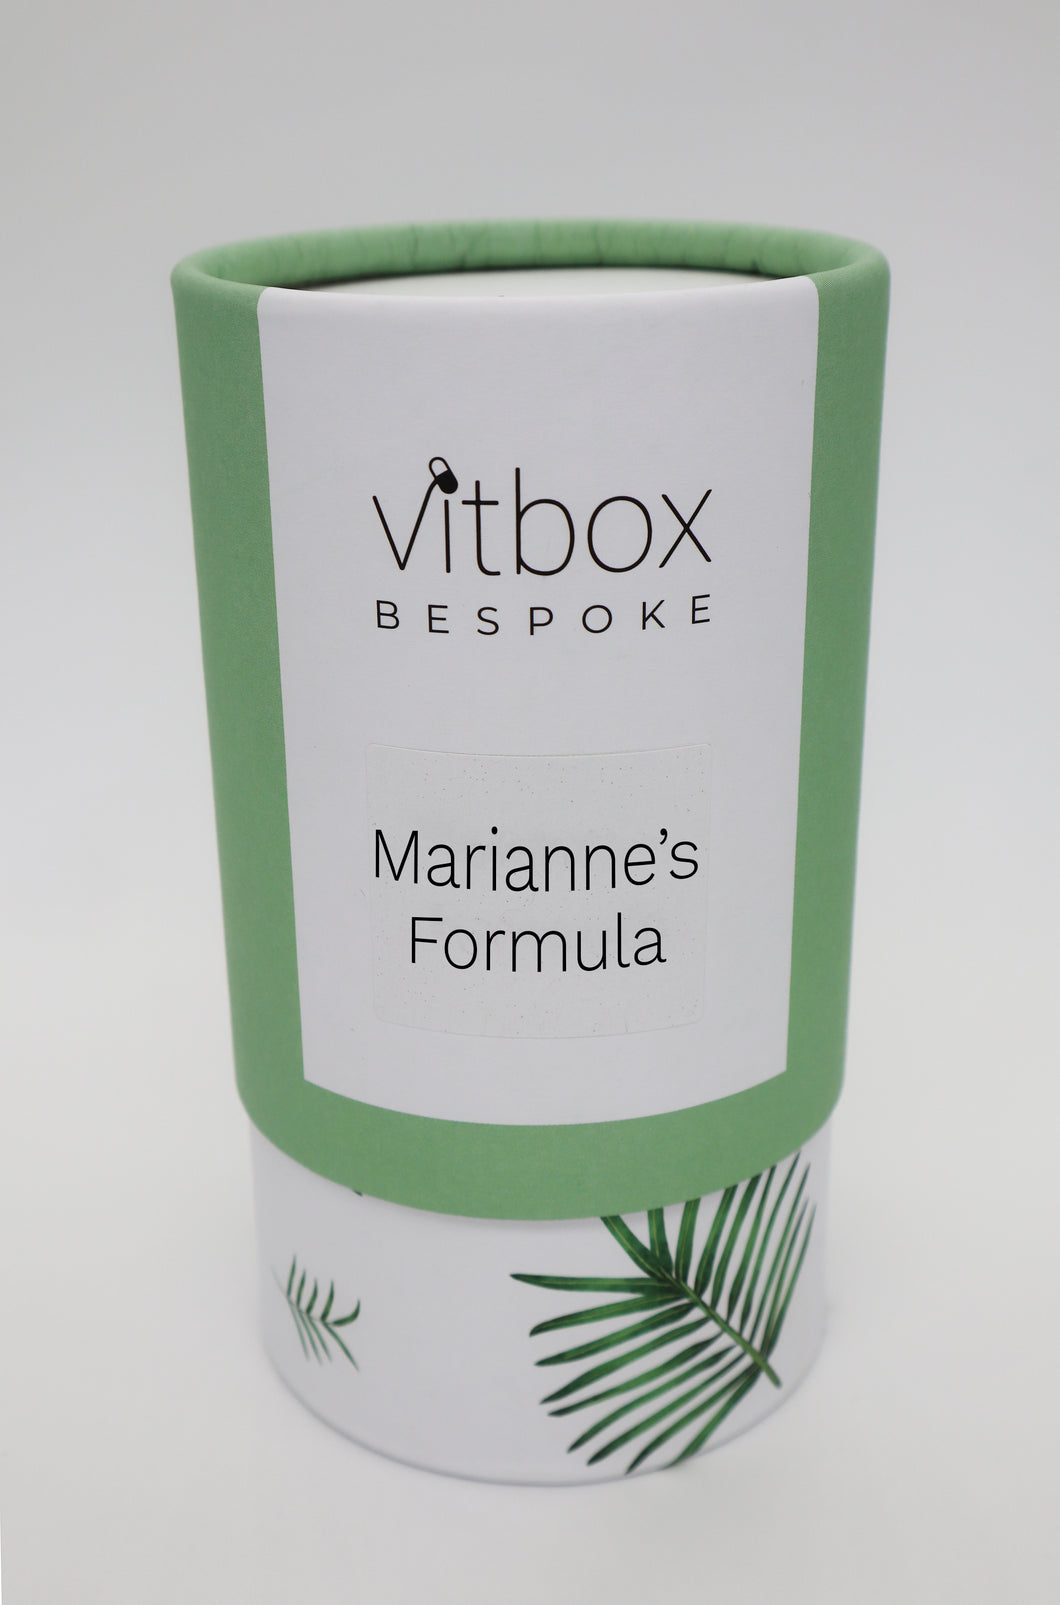 Marianne's Vitbox Bespoke